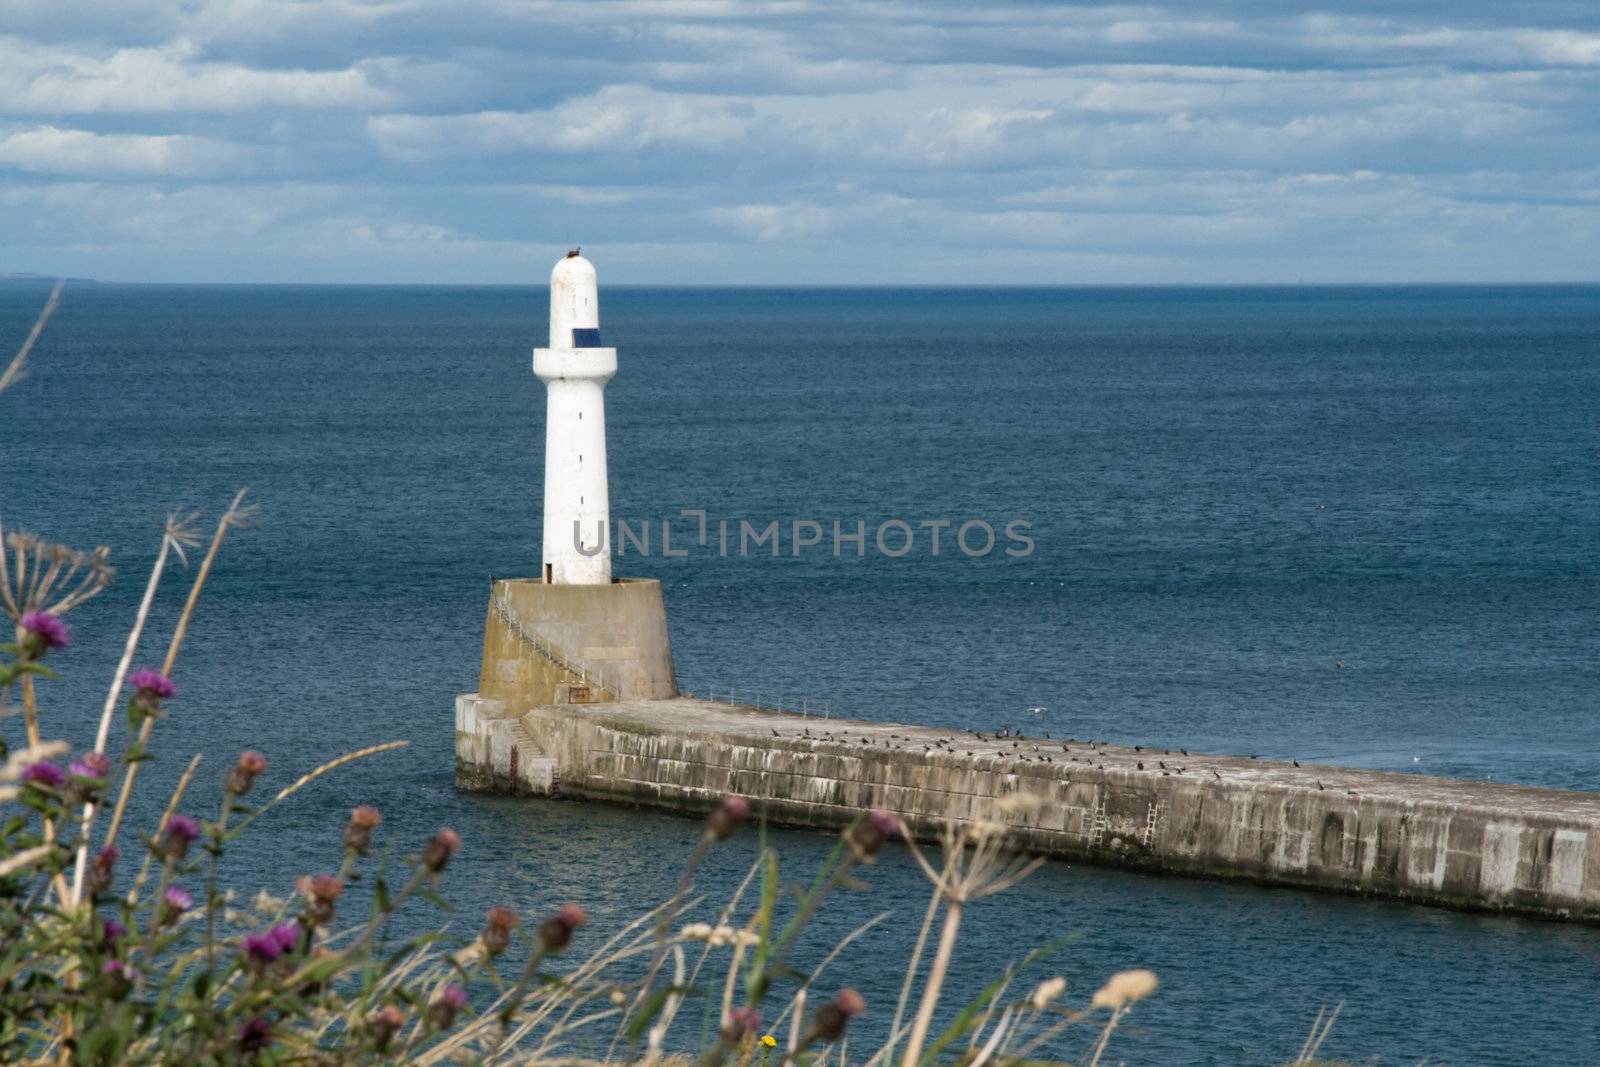 Lighthouse on a sunny day, against a stormy sky